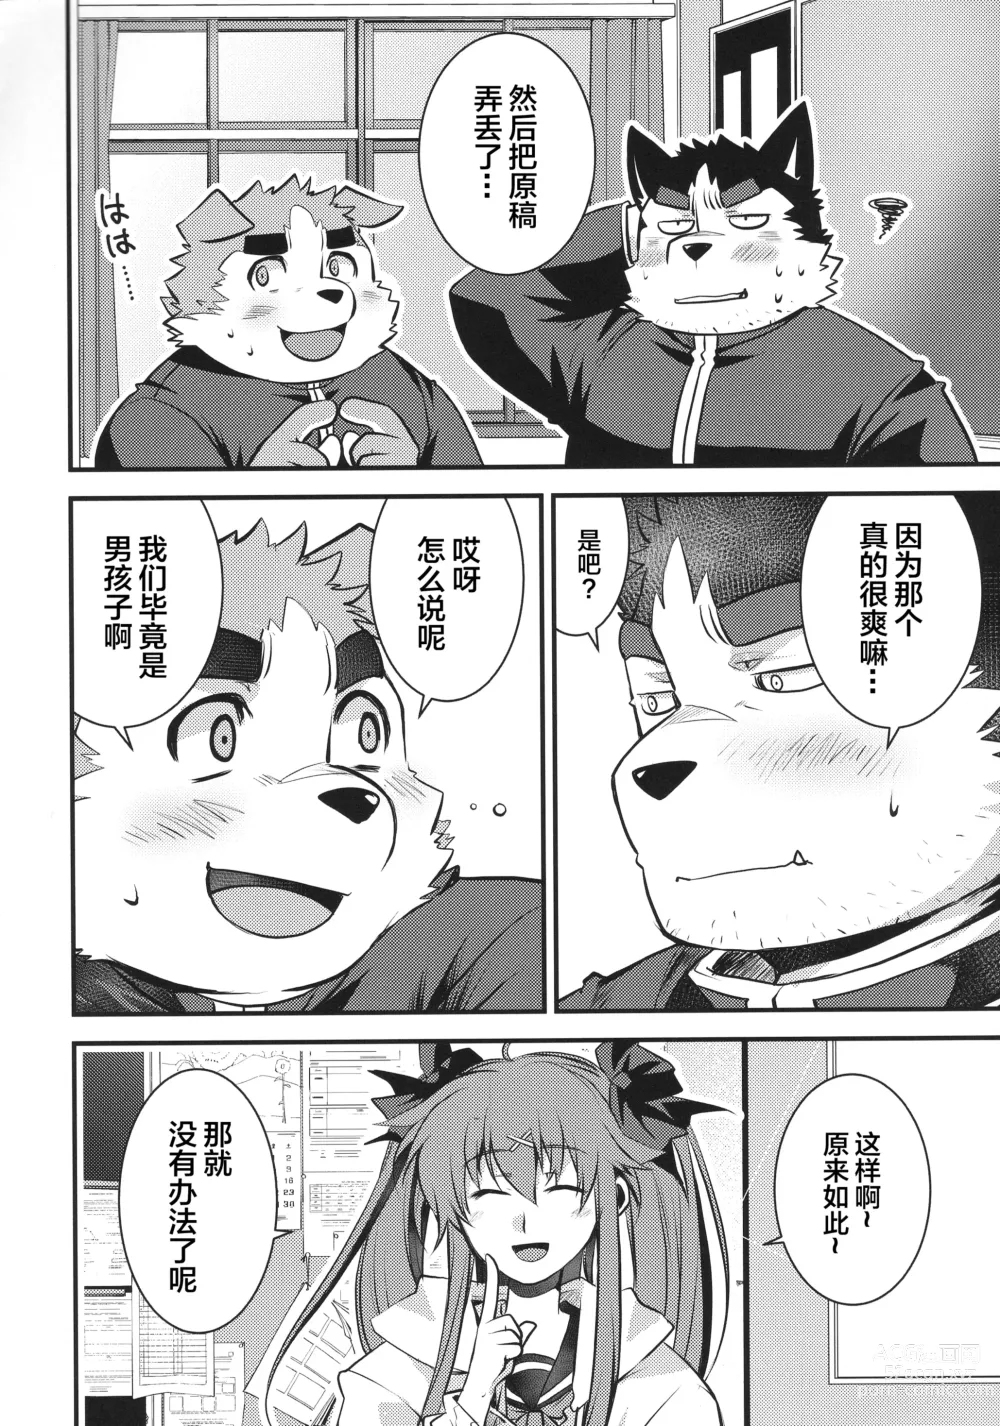 Page 24 of doujinshi Eccentric Shintai Kensa